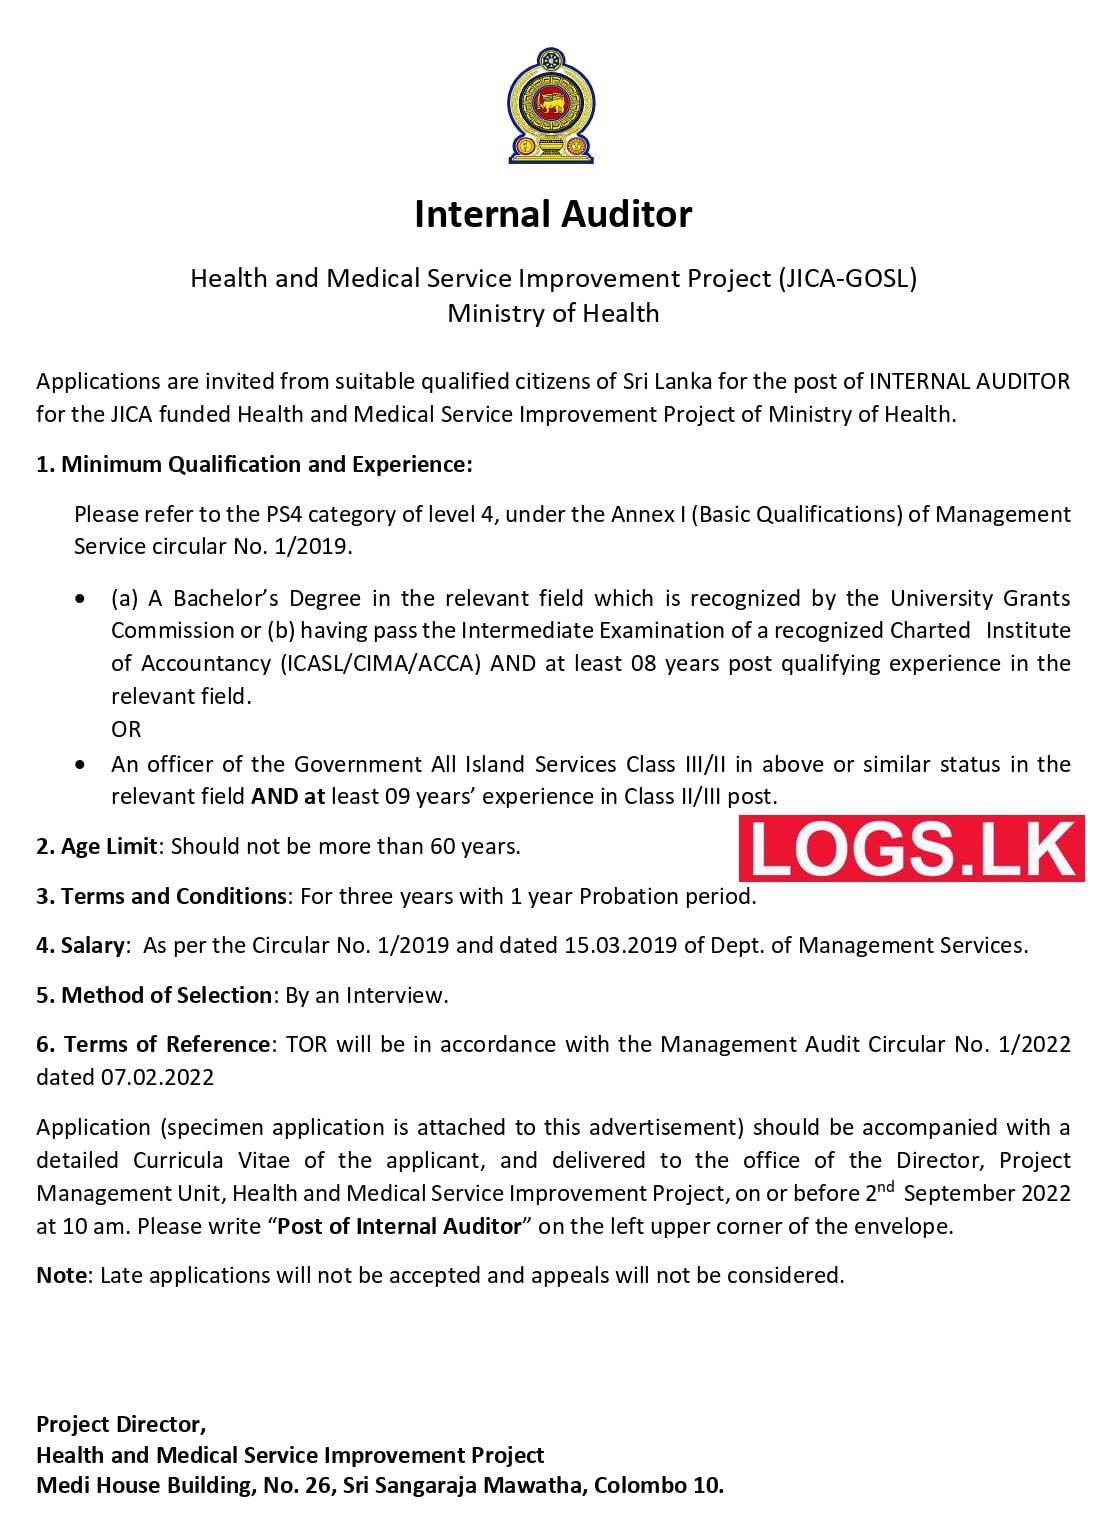 Internal Auditor Job Vacancy 2022 in Ministry of Health Jobs Vacancies Details, Application